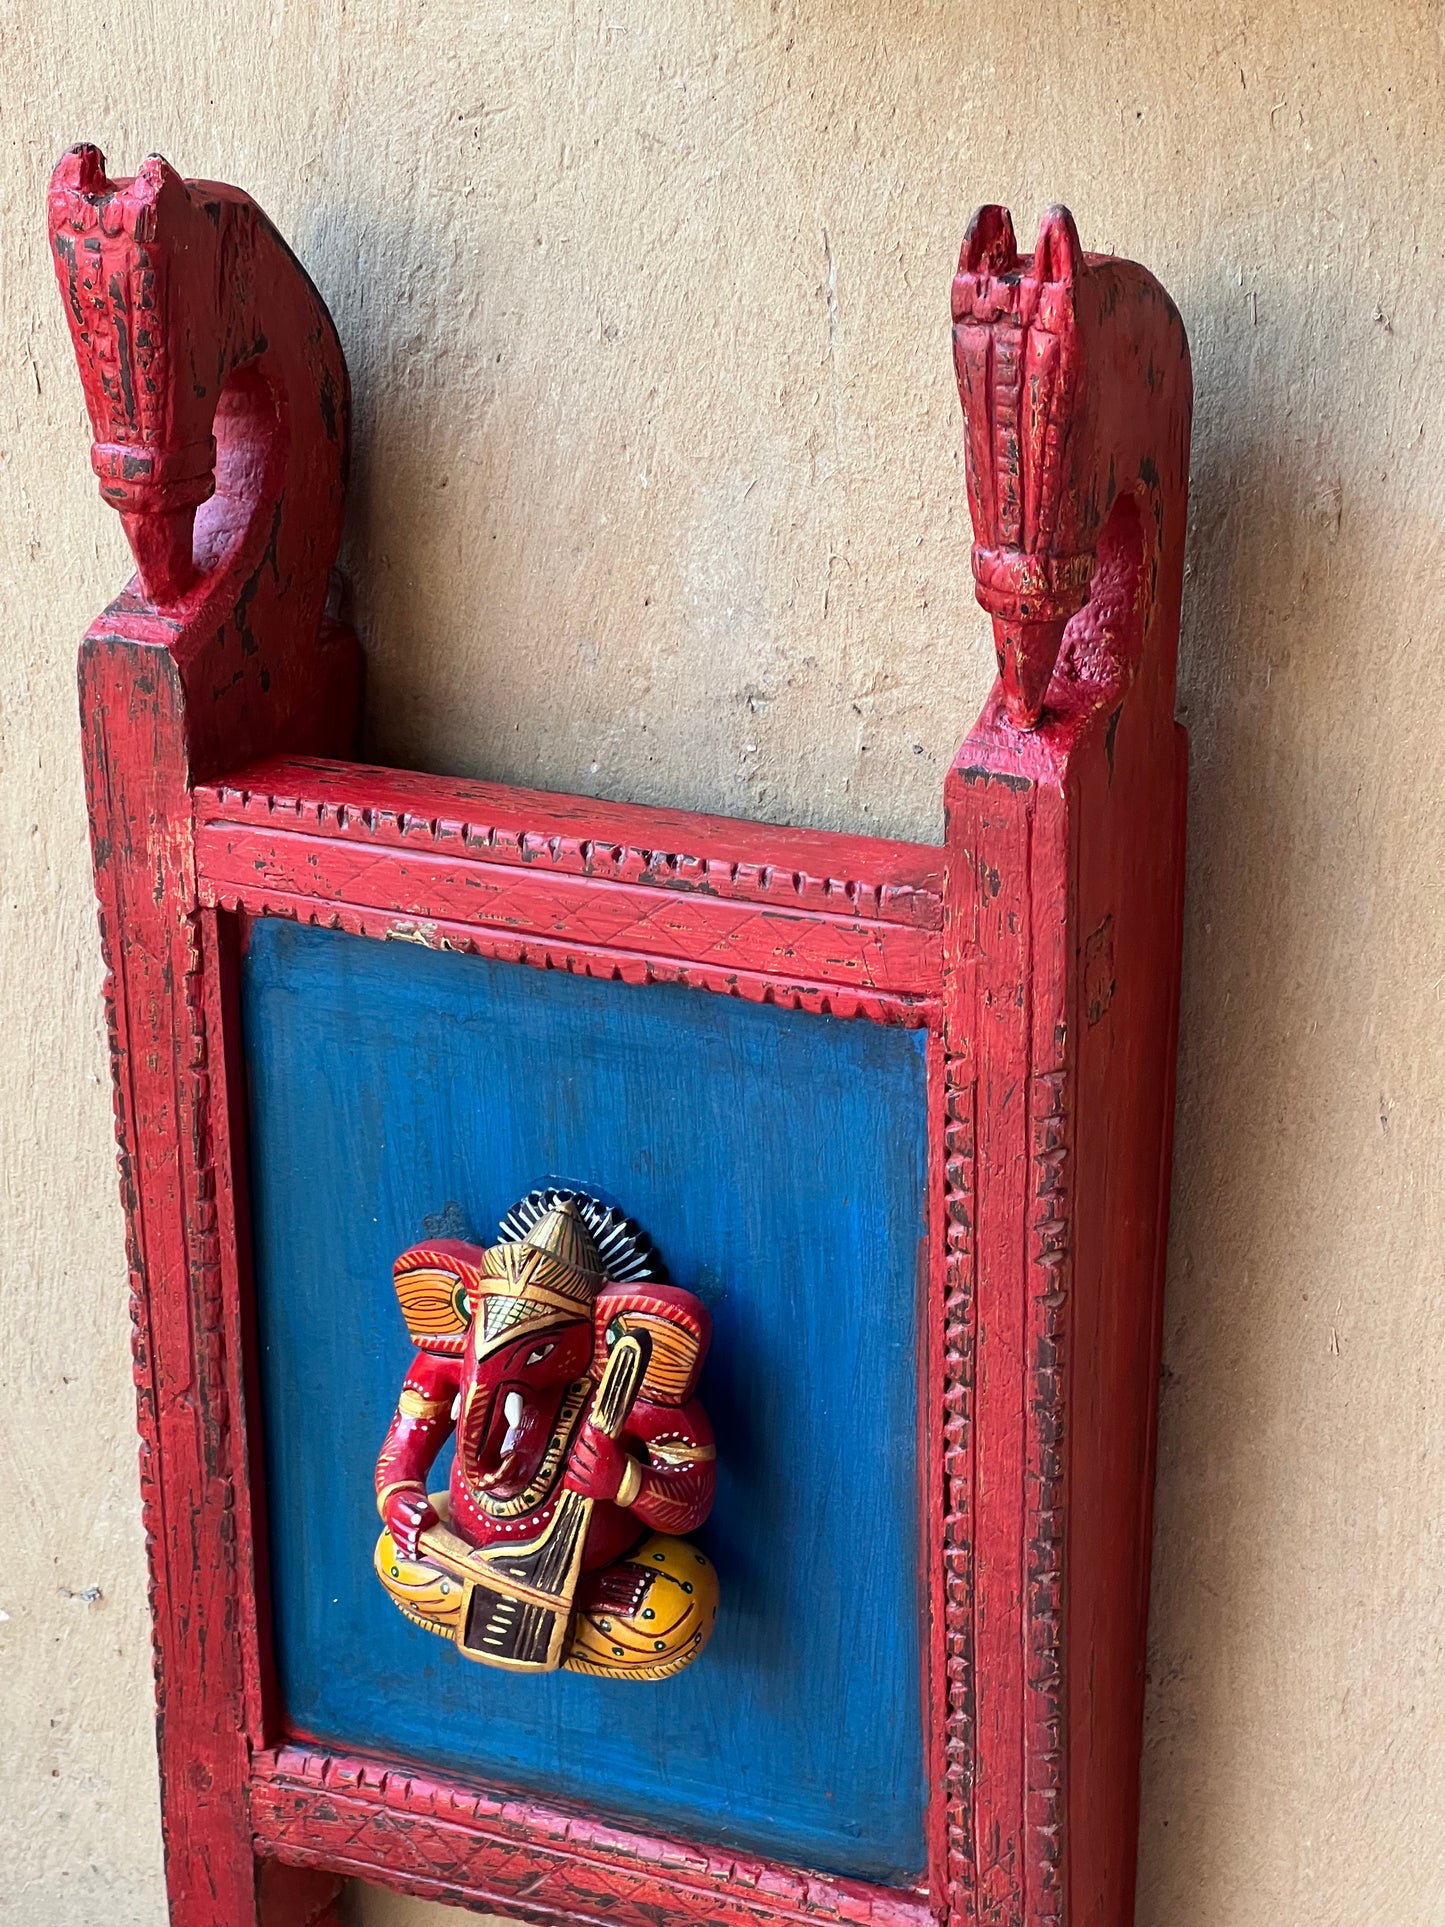 Gujarati Frame with Ganesha